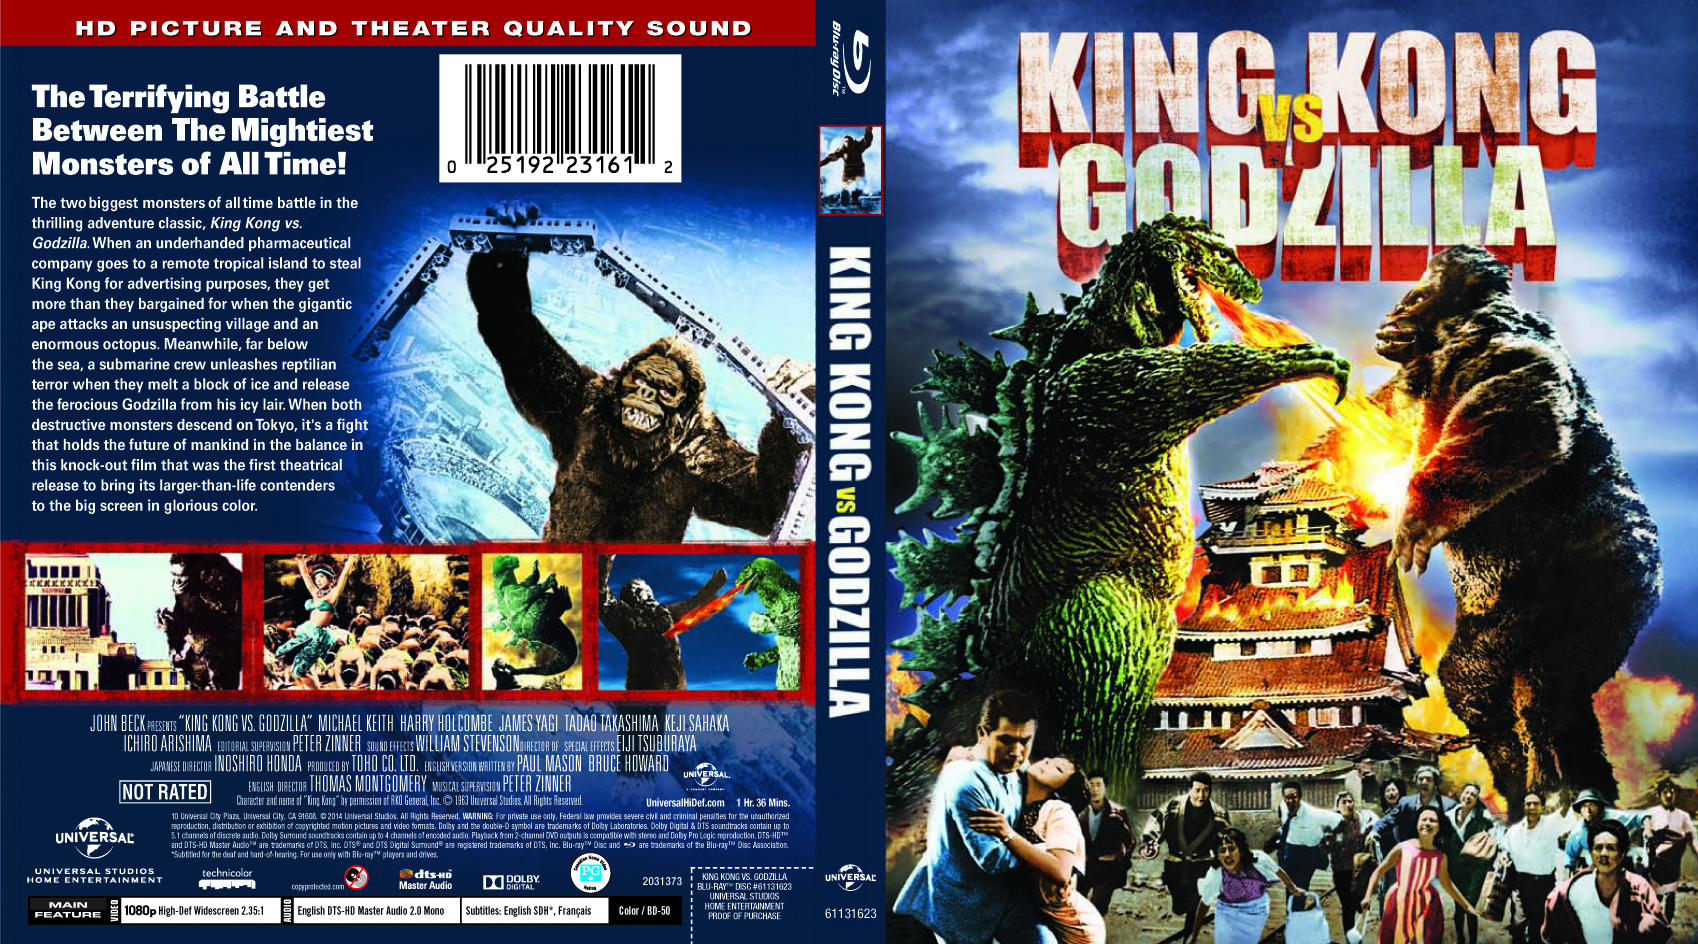 Nice wallpapers King Kong Vs. Godzilla  1698x944px